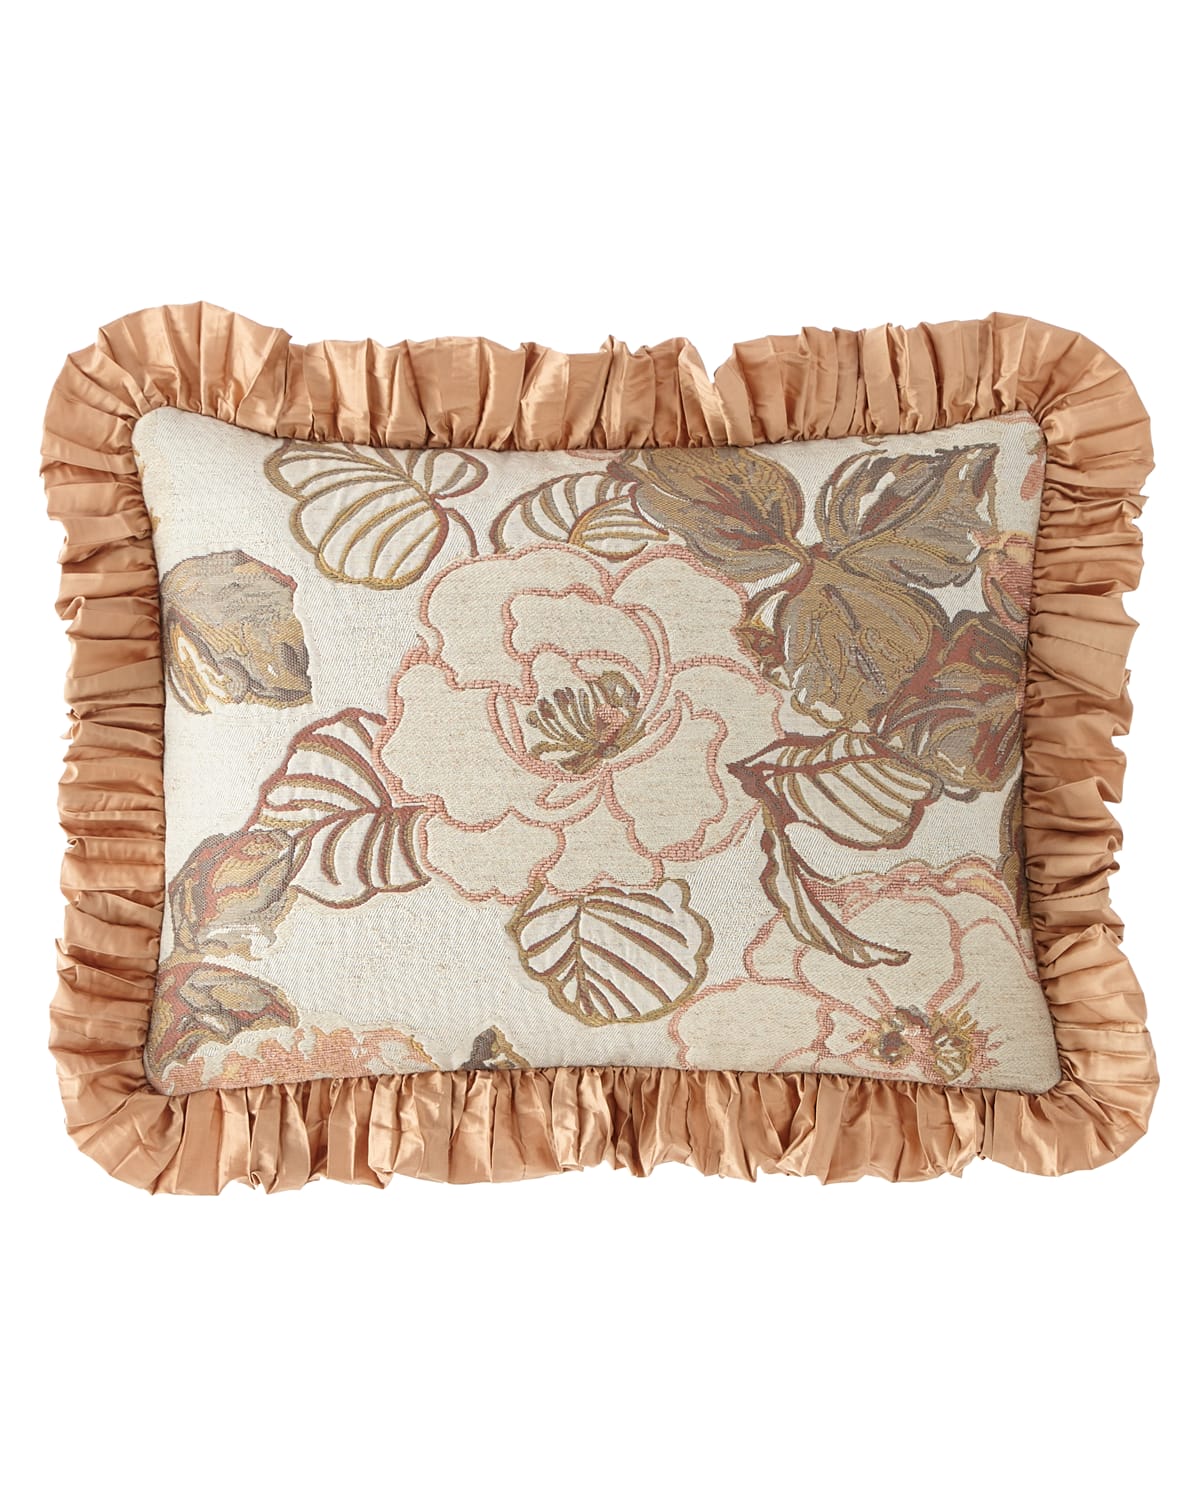 Image Austin Horn Collection Beauty Boudoir Pillow